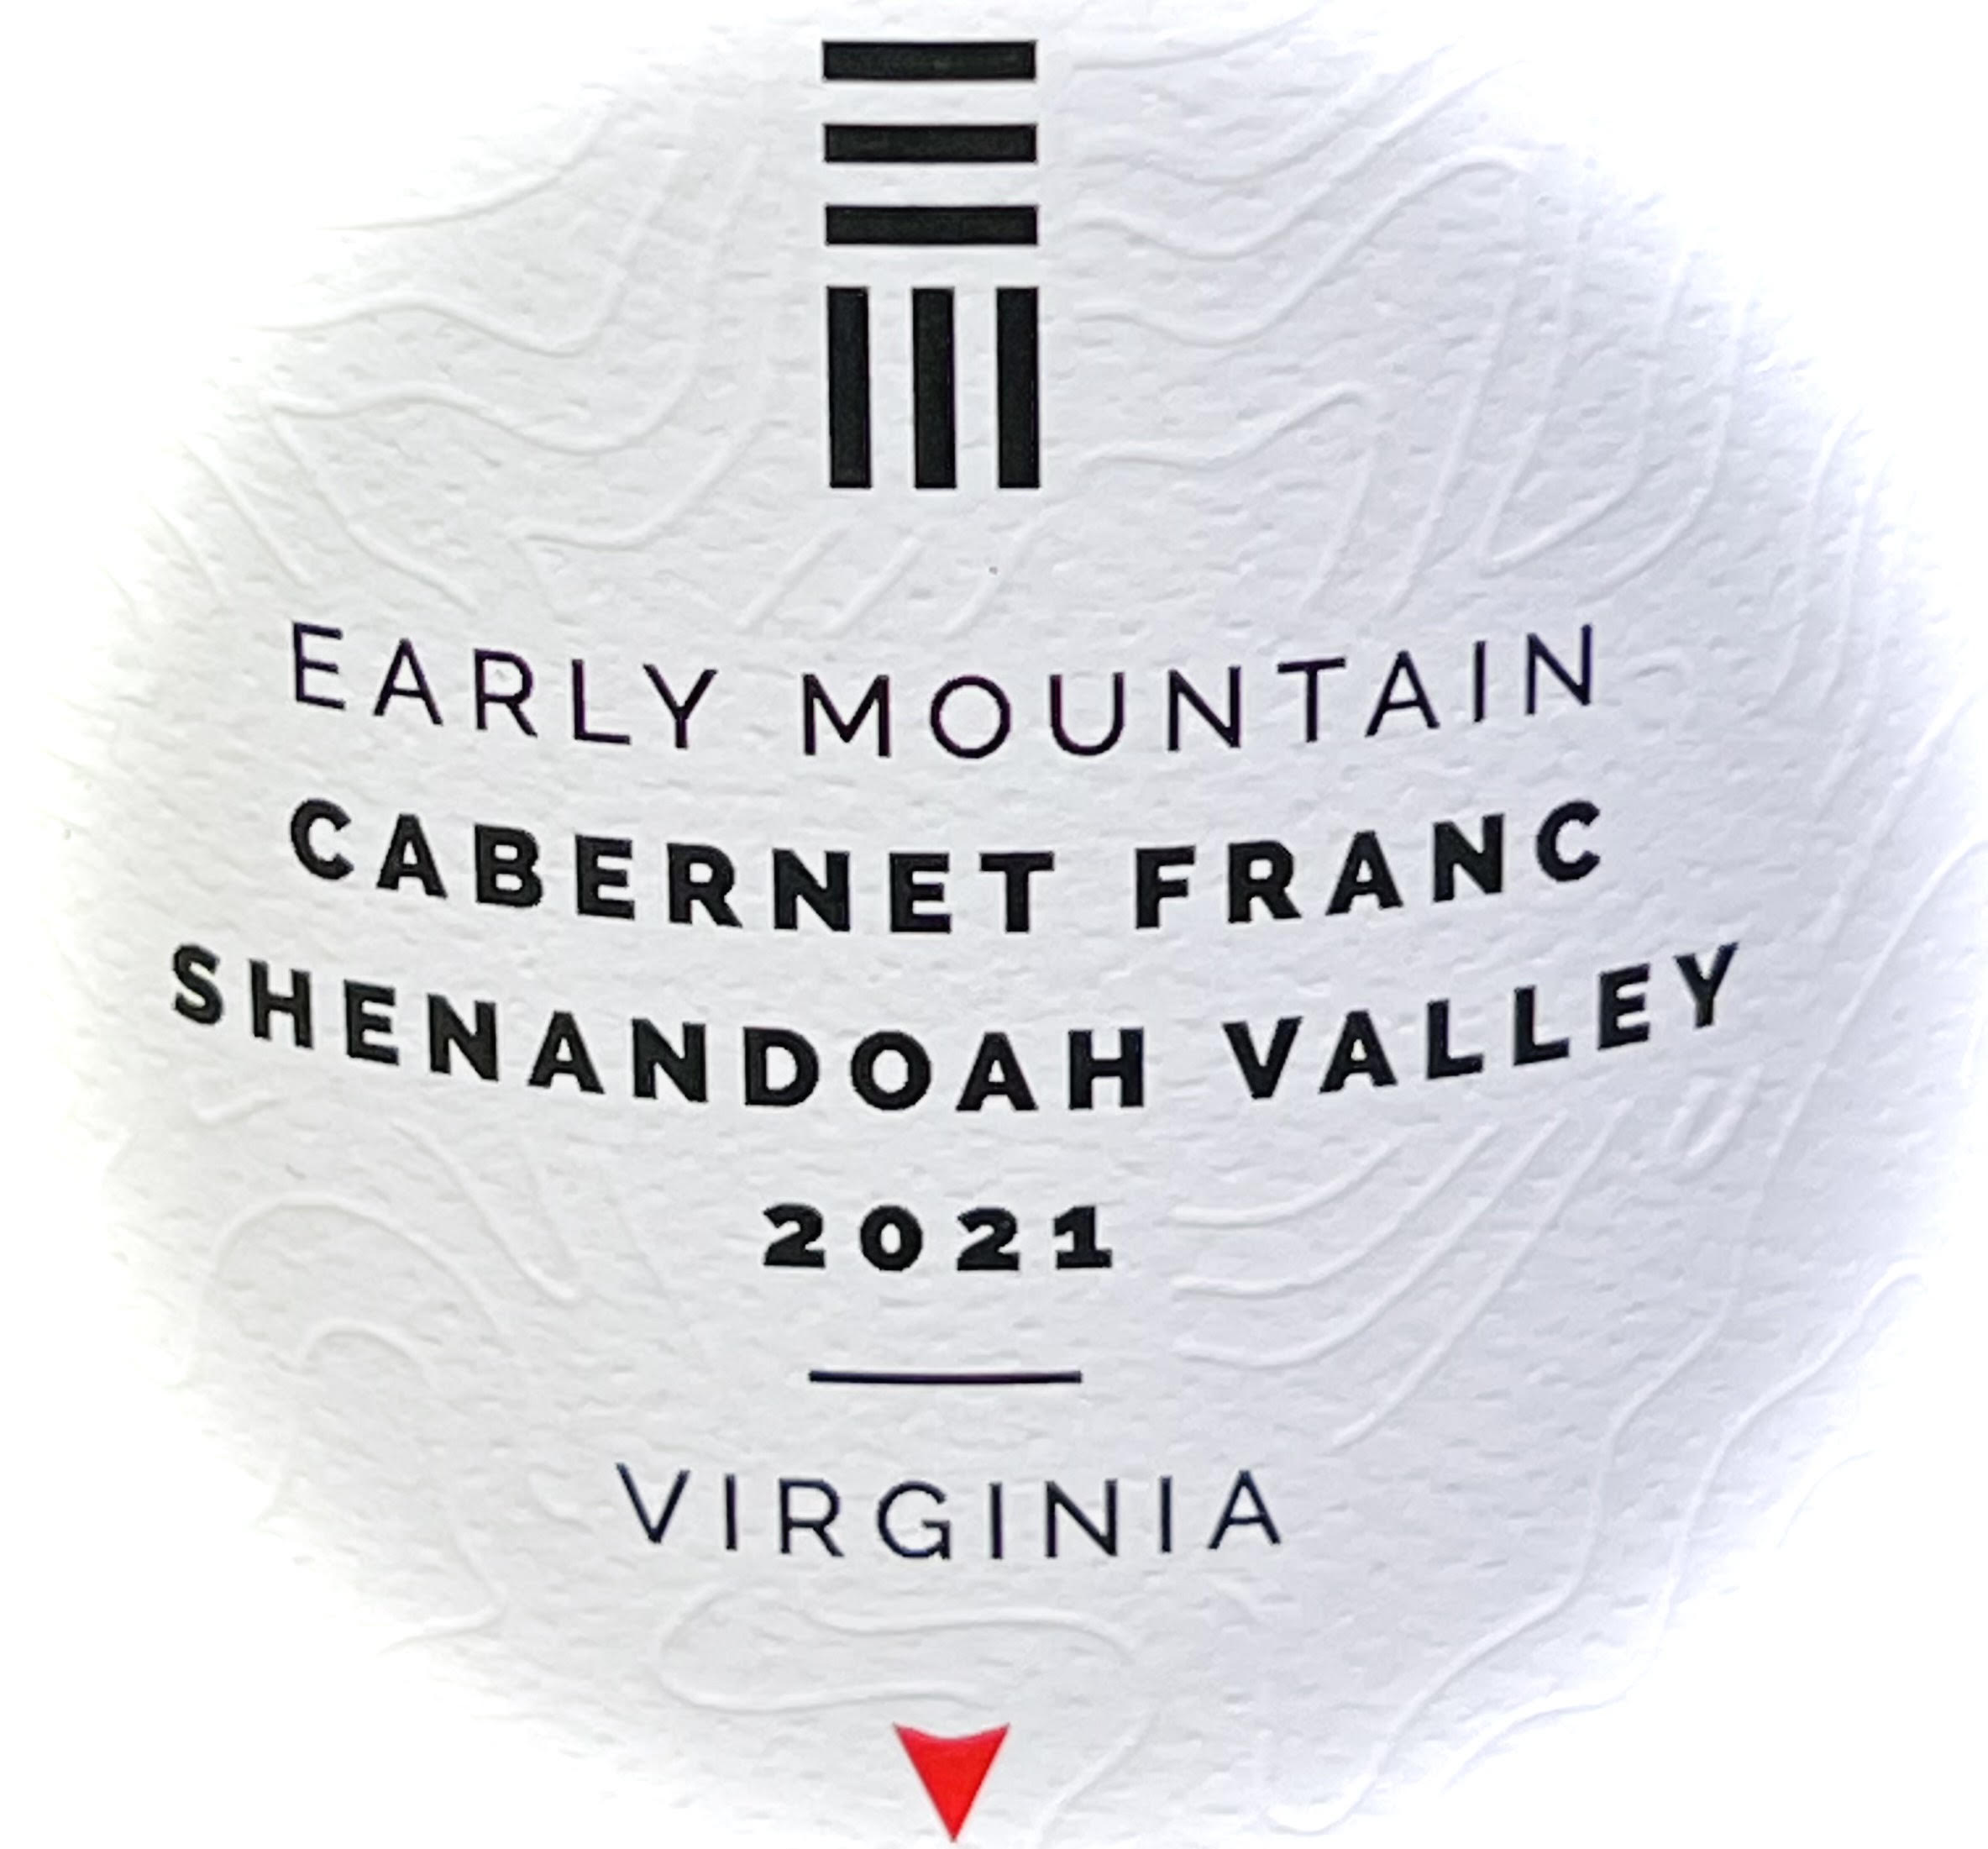 Early Mountain Cabernet Franc Shenandoah Valley 2021